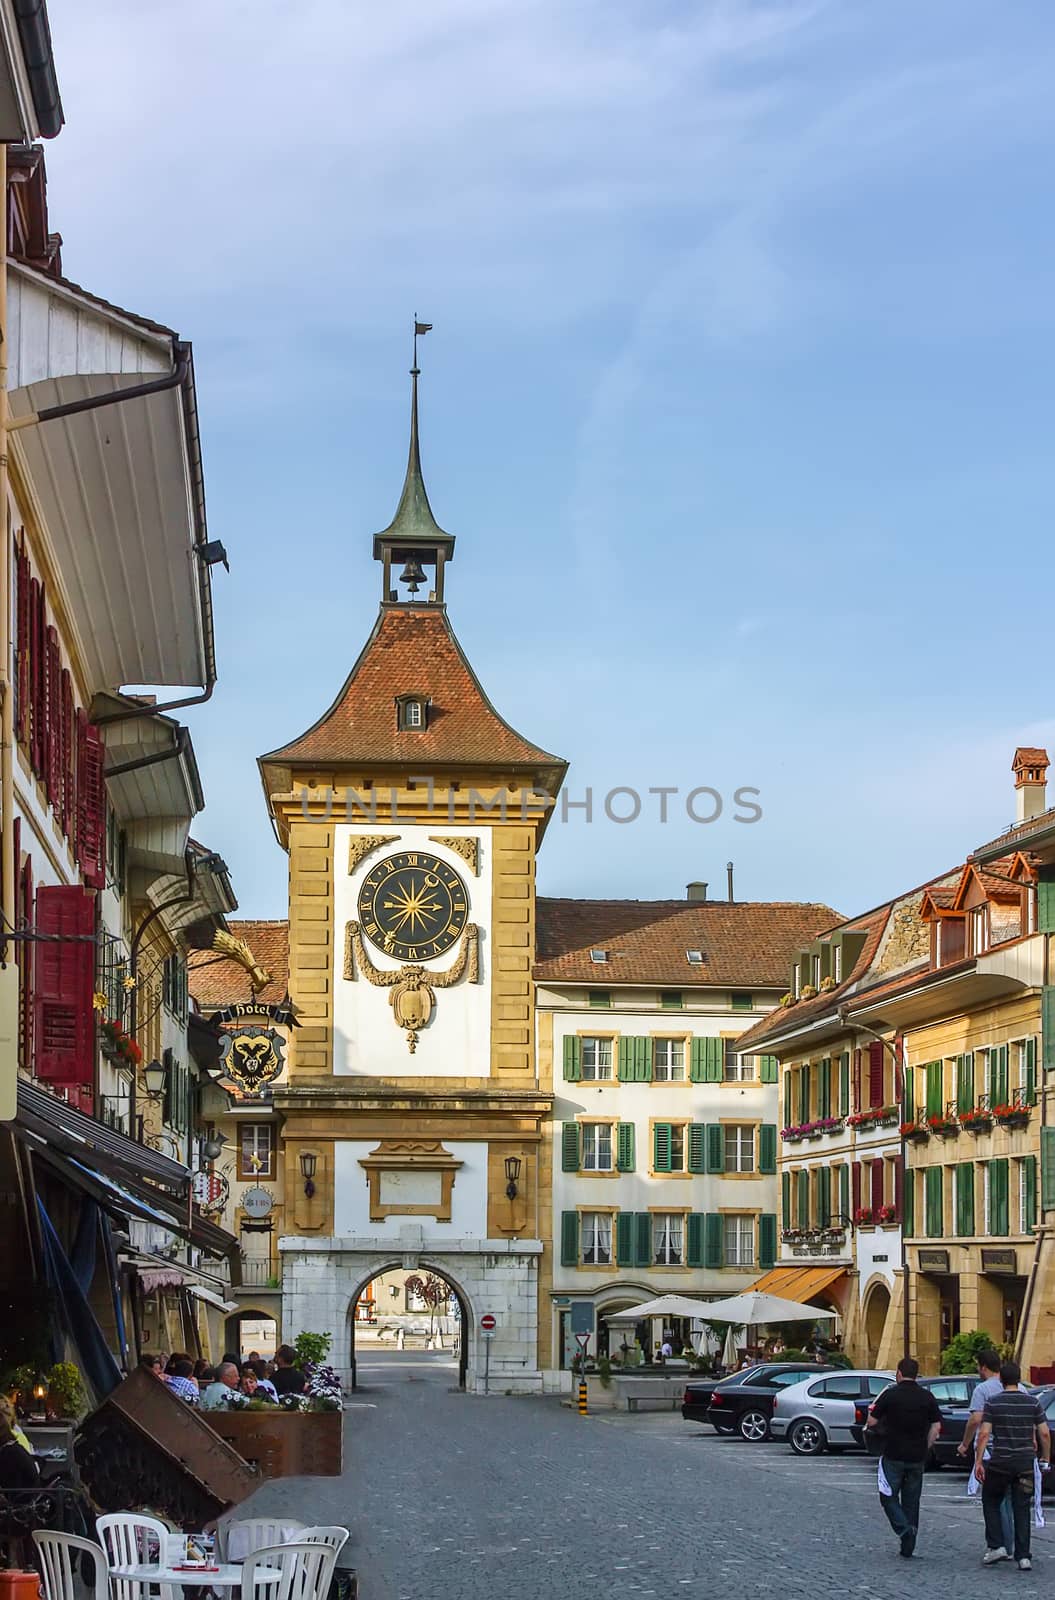 street with clock tower in Murten, Switzerland